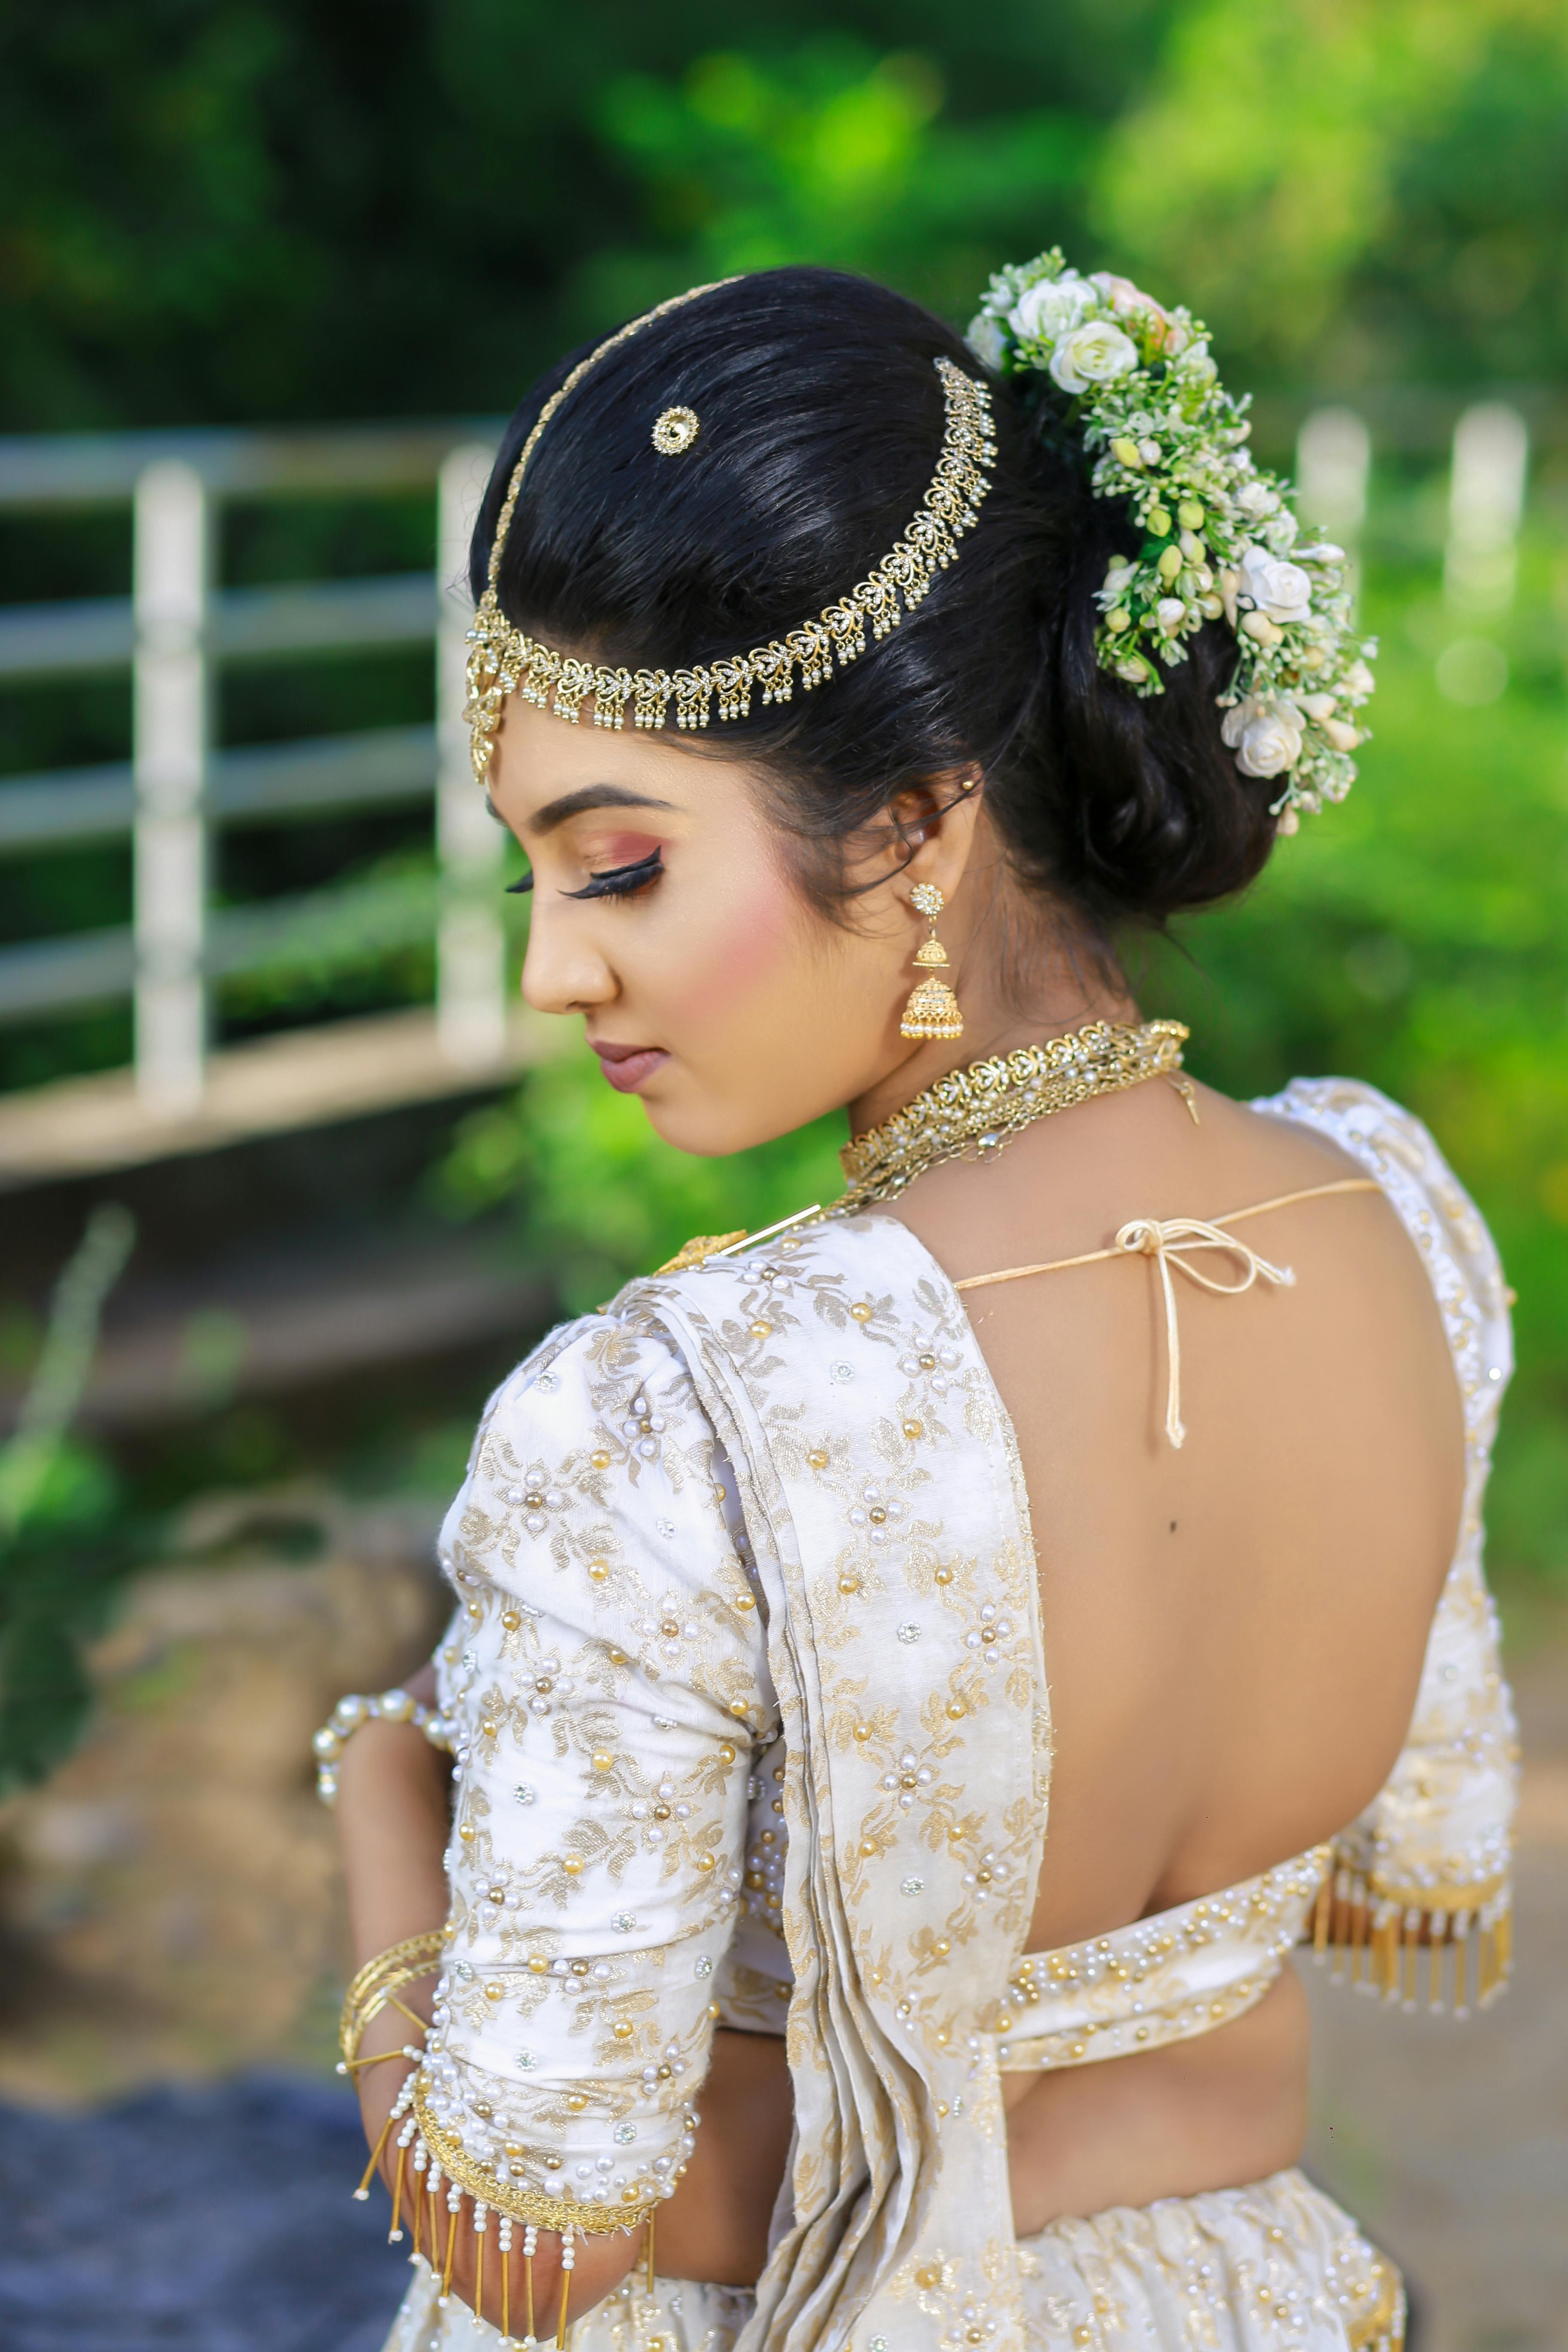 30 Kandyan Bride Hairstyles @AshiFashion - YouTube